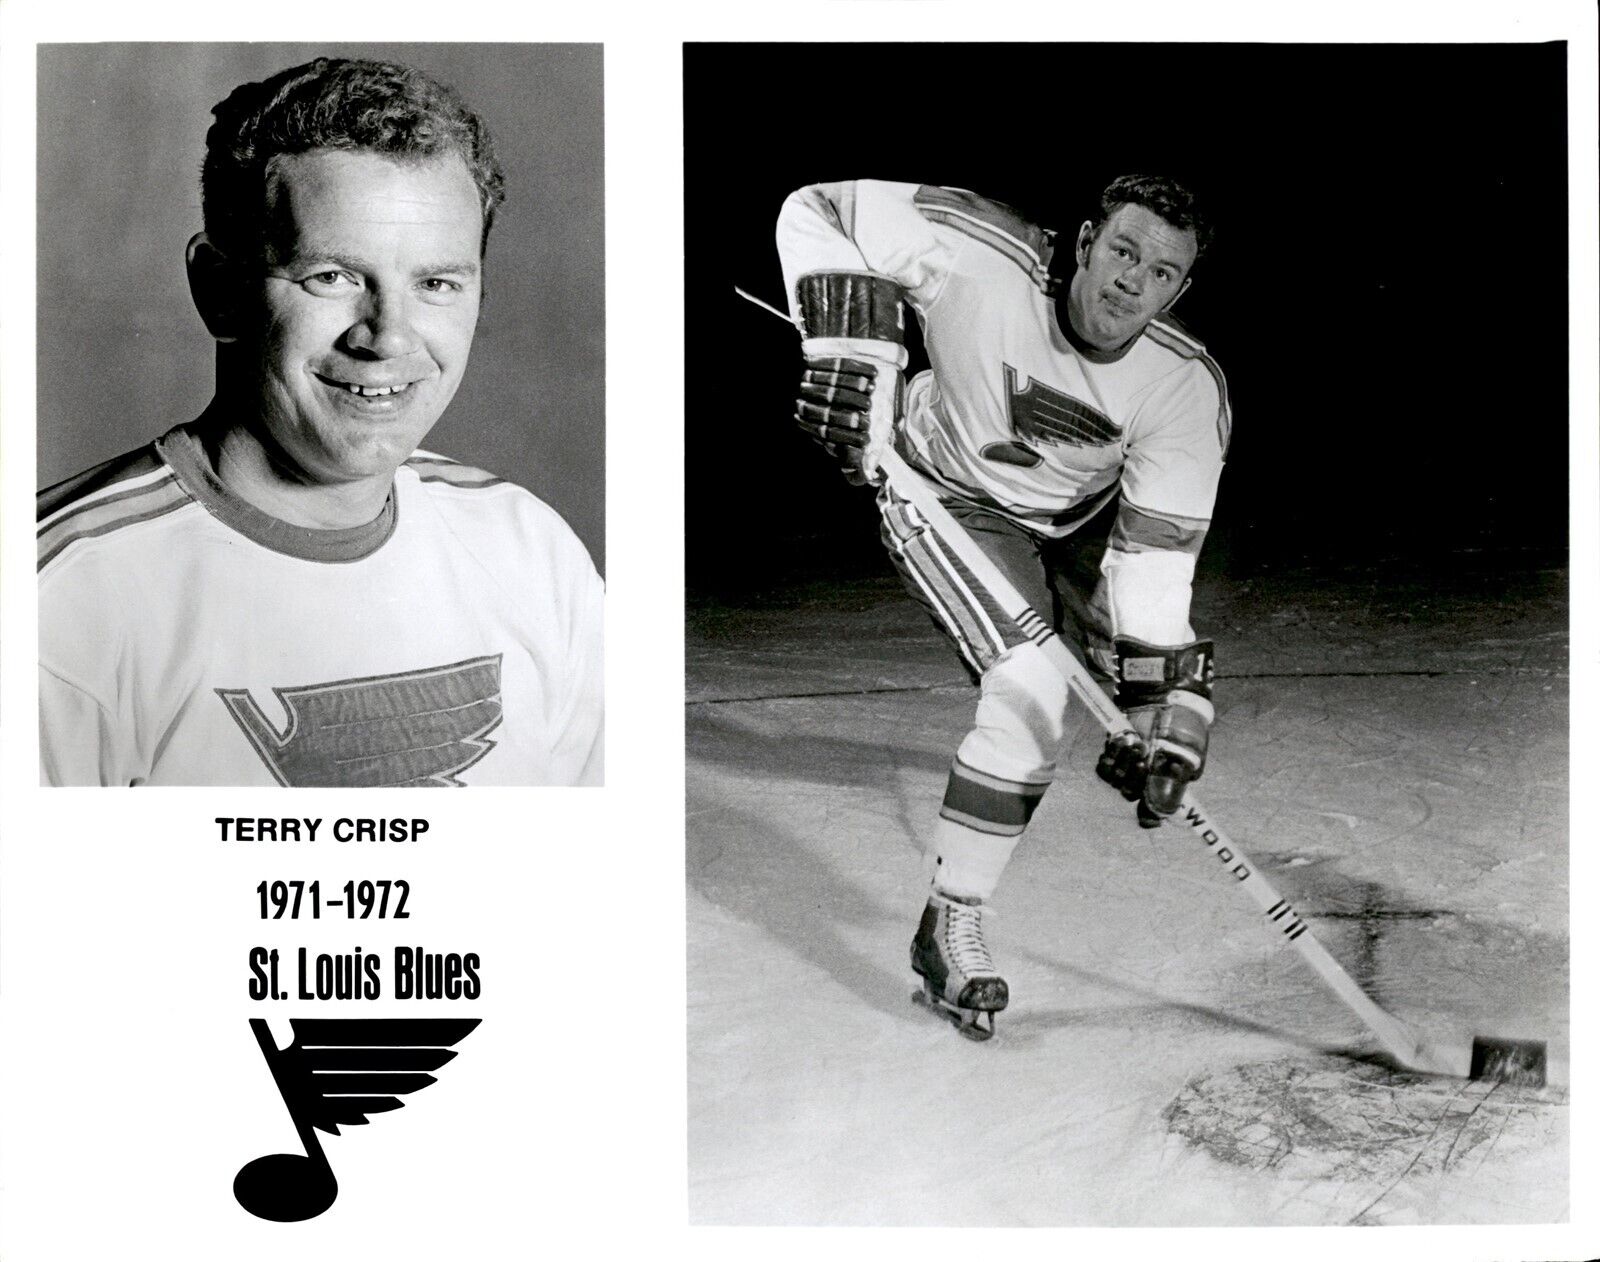 PF11 Original Photo TERRY CRISP 1971-72 ST LOUIS BLUES CLASSIC NHL HOCKEY CENTER